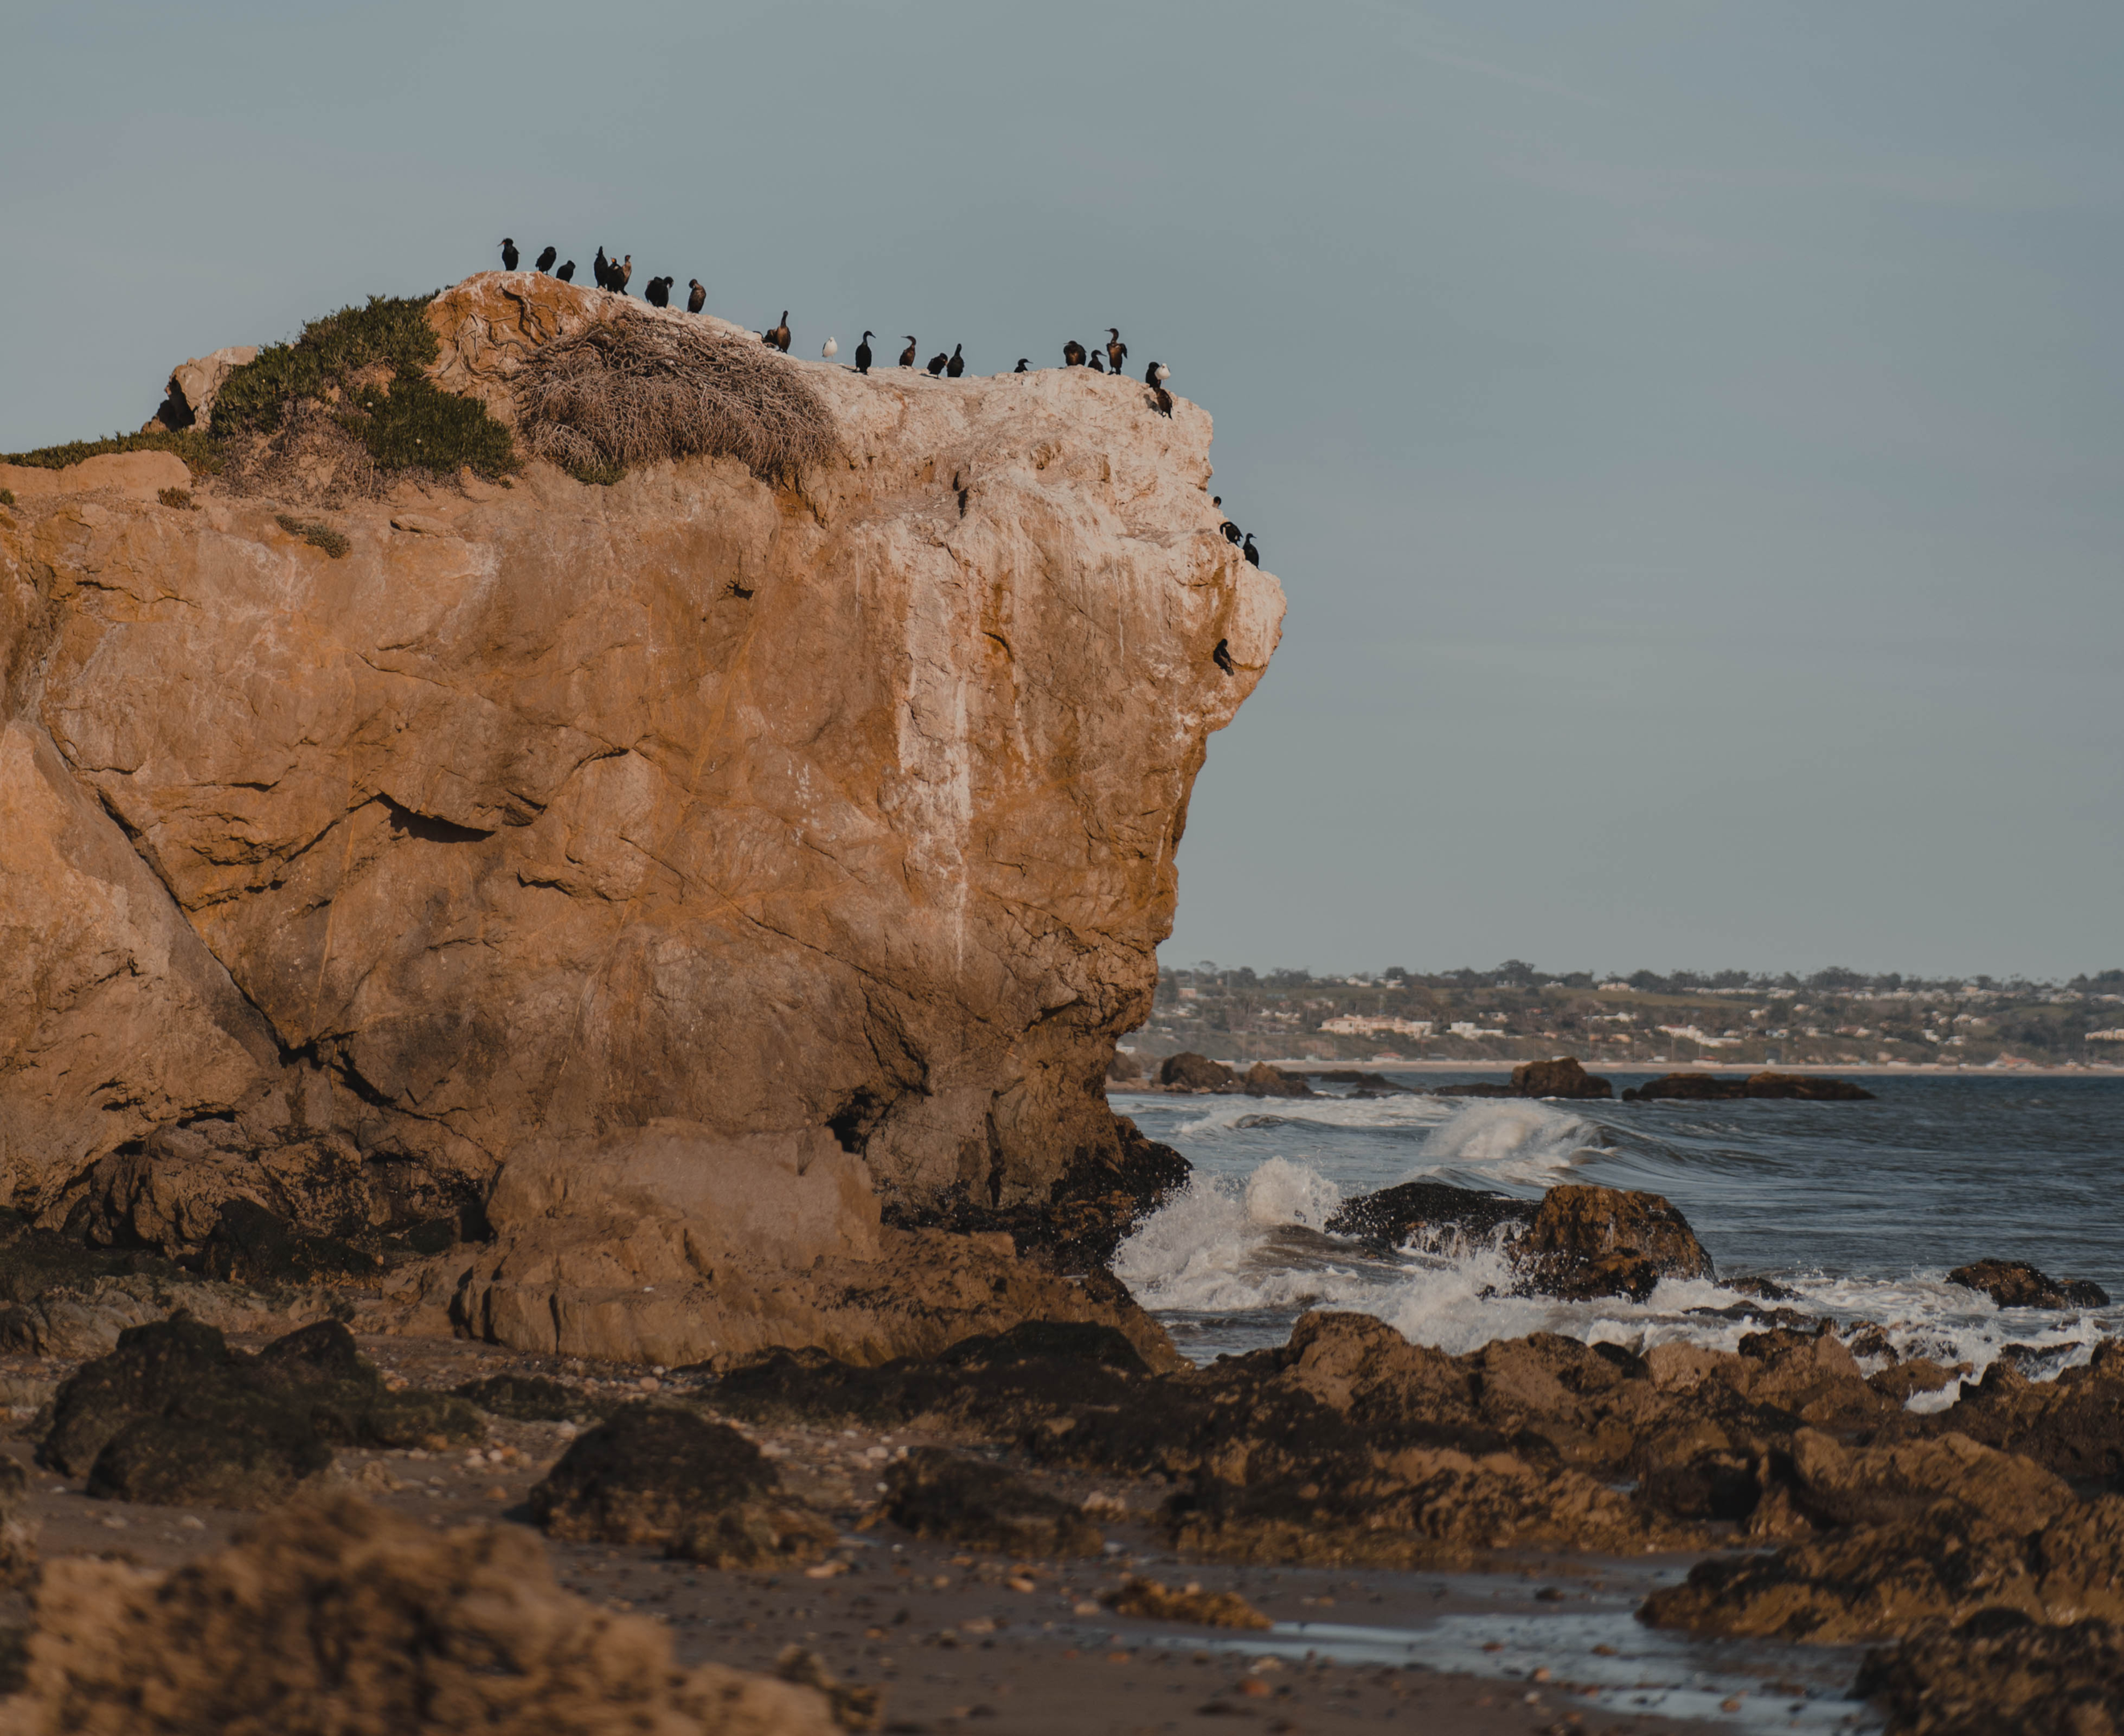 Rock formation with birds at El Matador Beach in Malibu, California. Photo by @WayfareWithPierre on Instagram